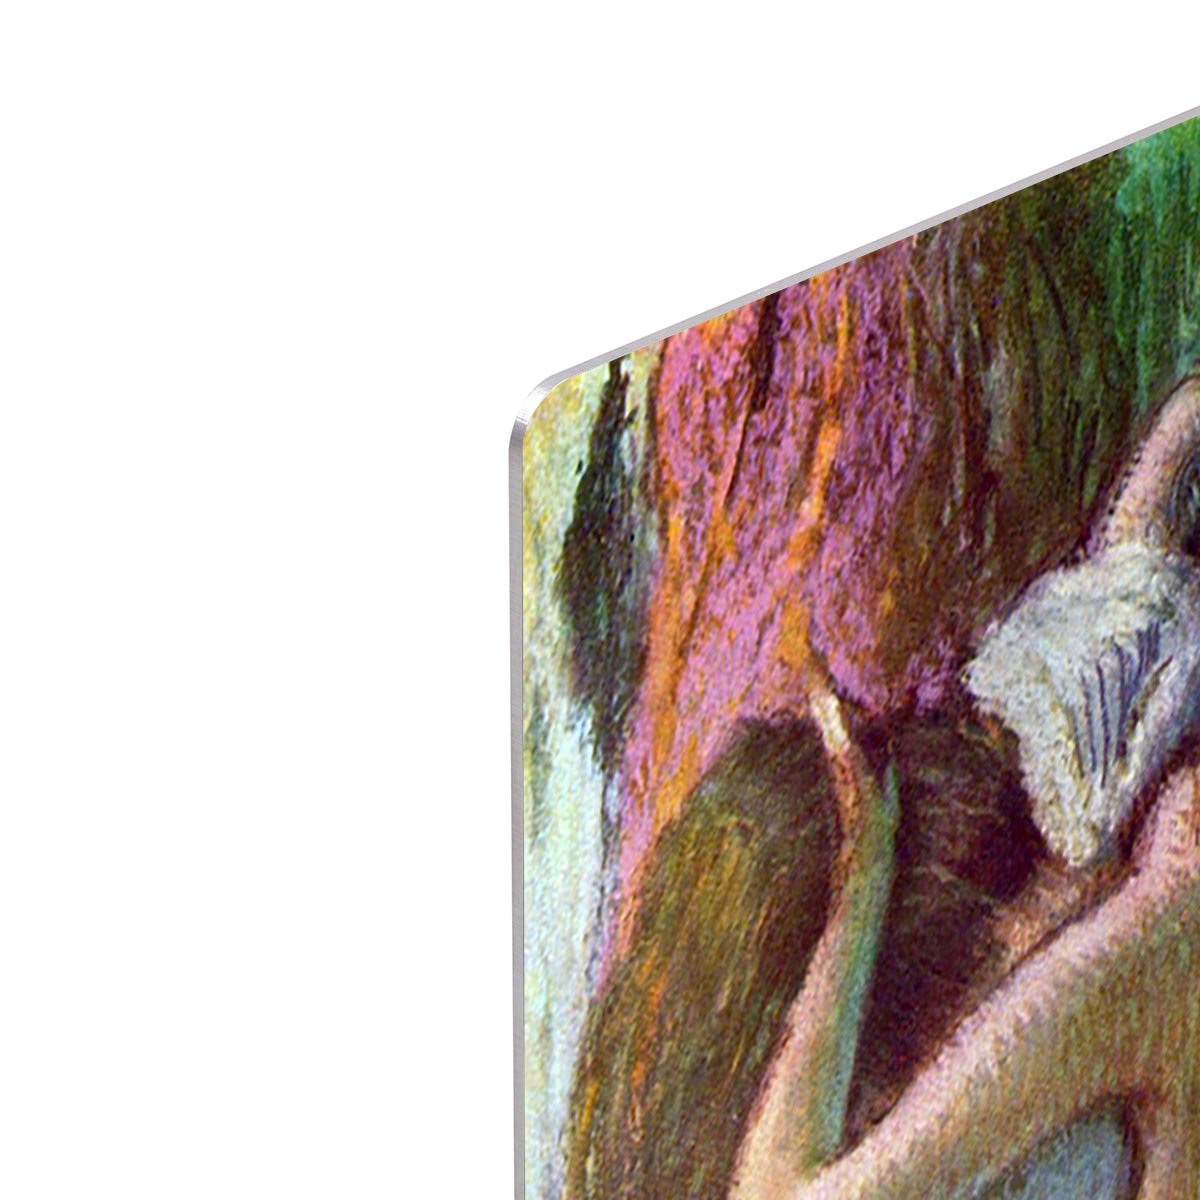 After bathing 1 by Degas HD Metal Print - Canvas Art Rocks - 4